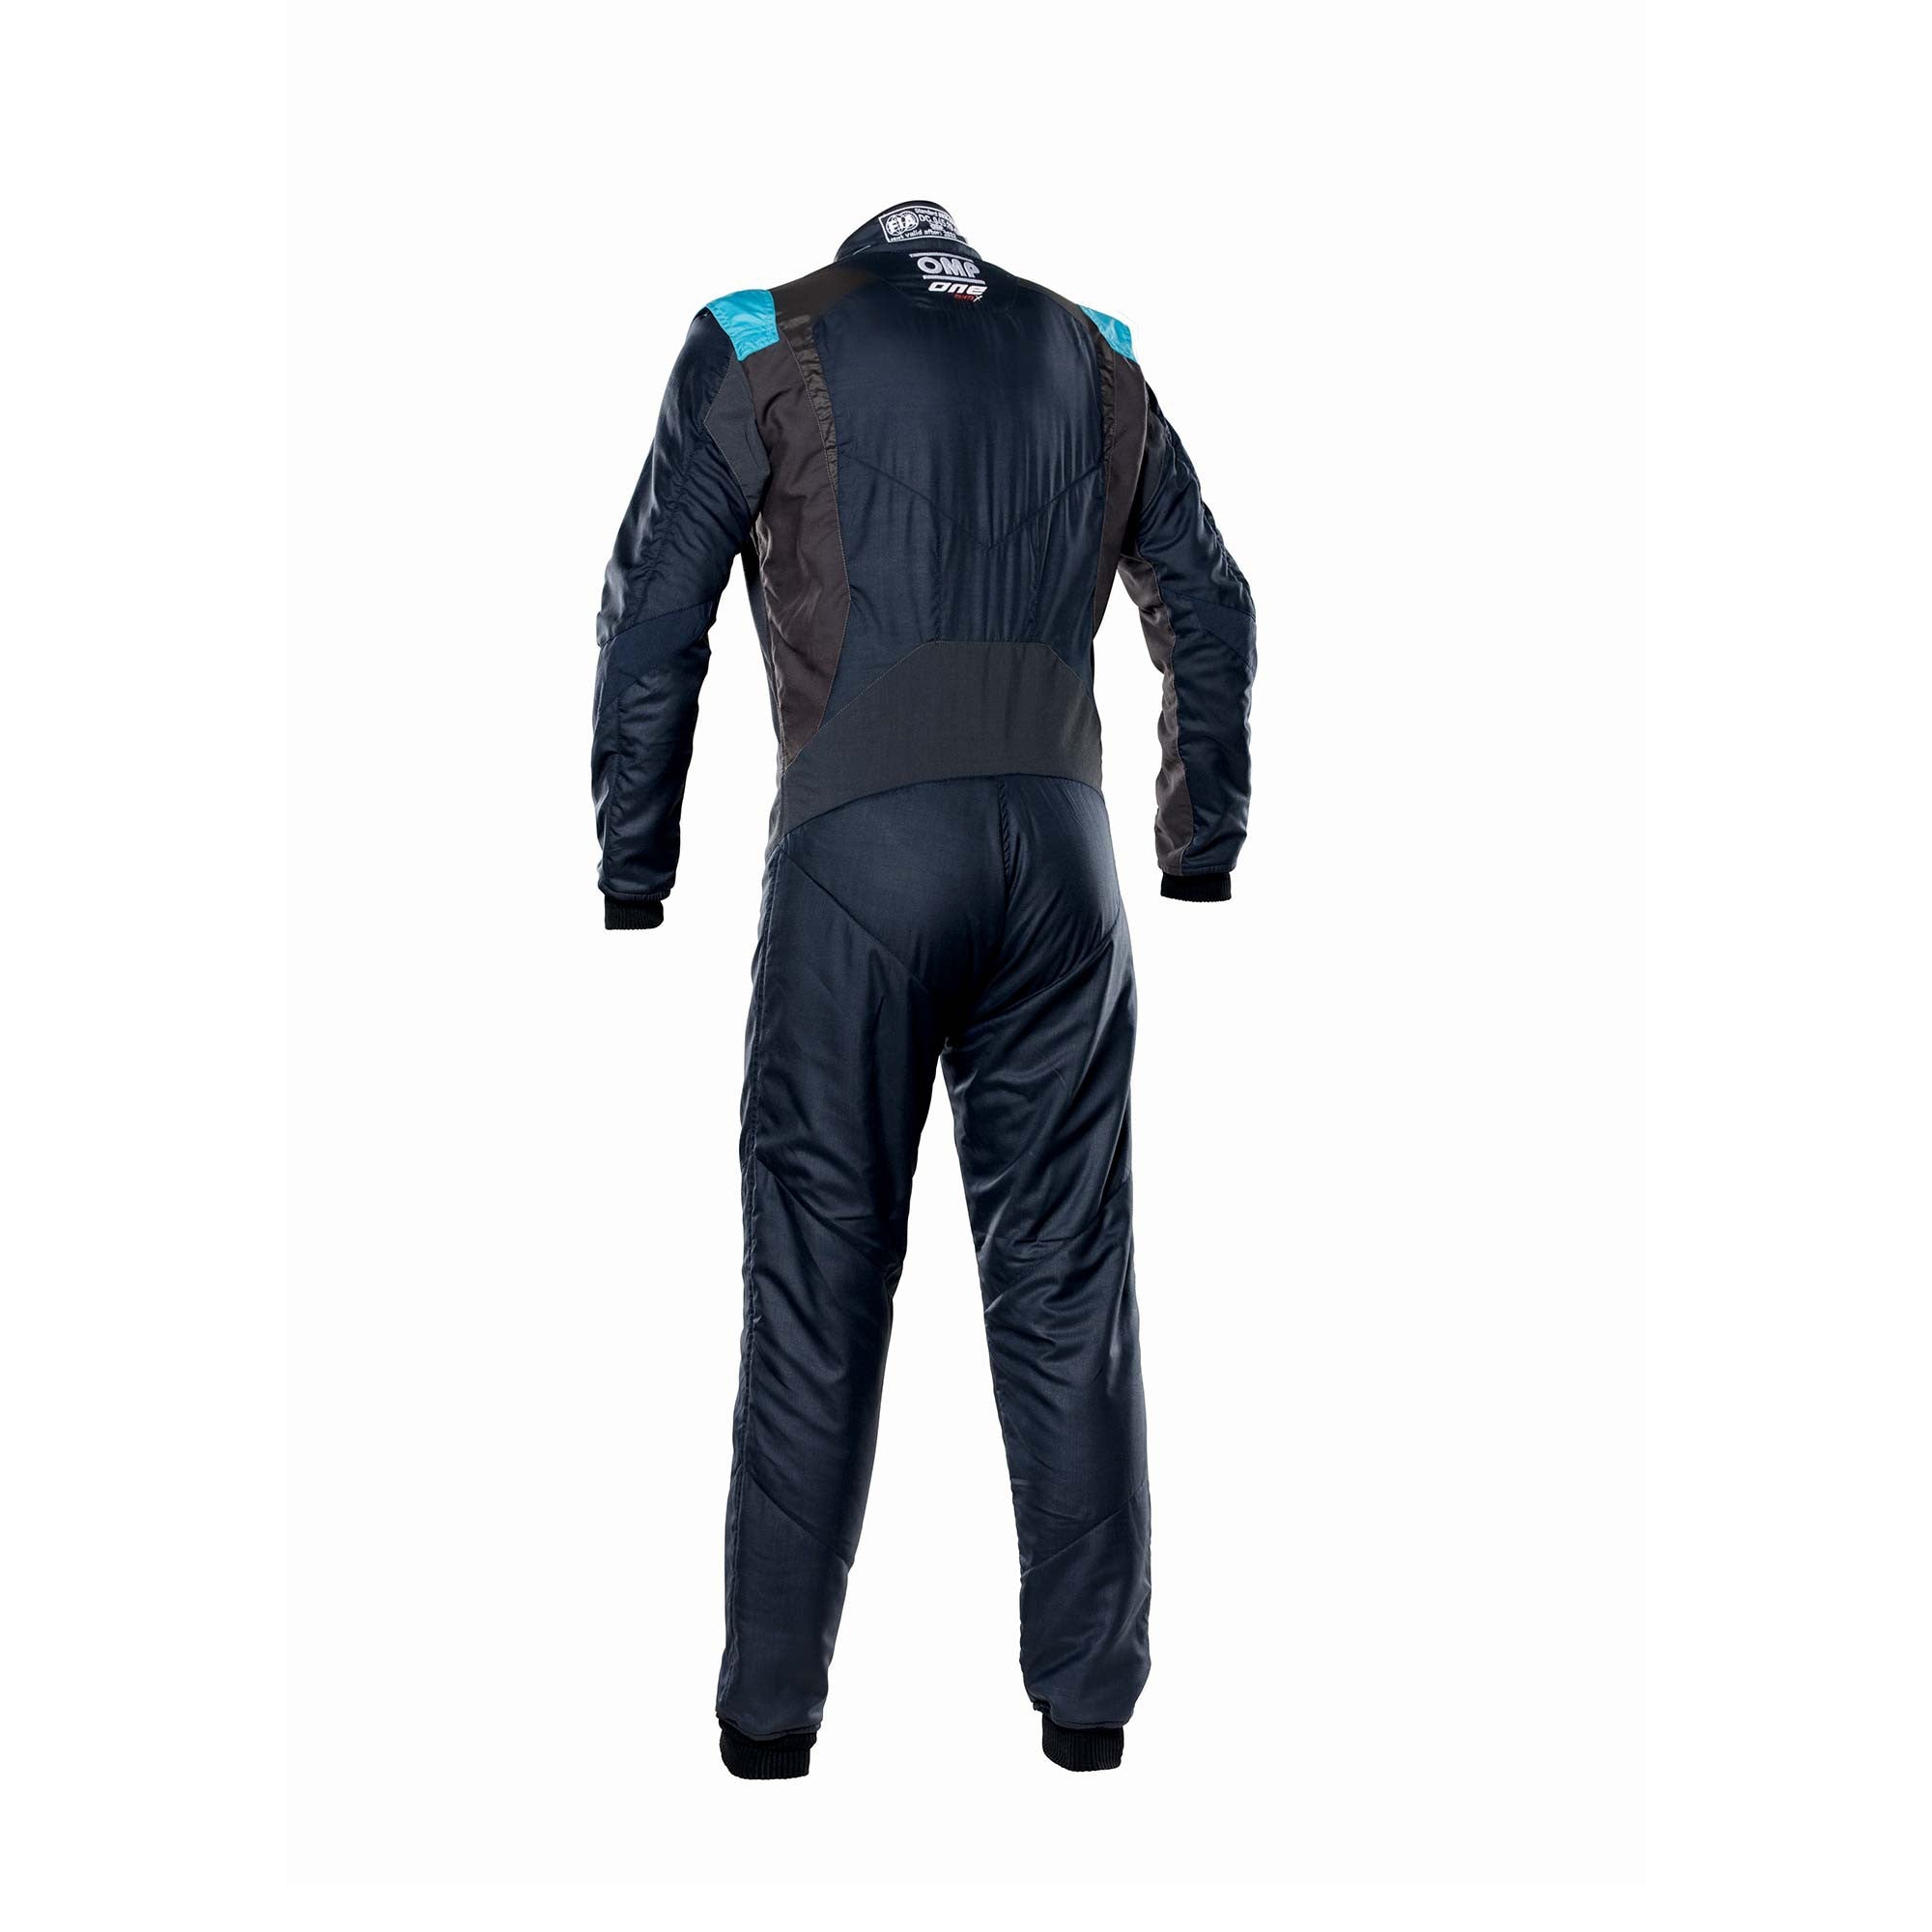 OMP IA0-1861-A01-246-50 Racing suit ONE EVO X, FIA 8856-2018, navy blue/gray/cyan, size 50 Photo-1 